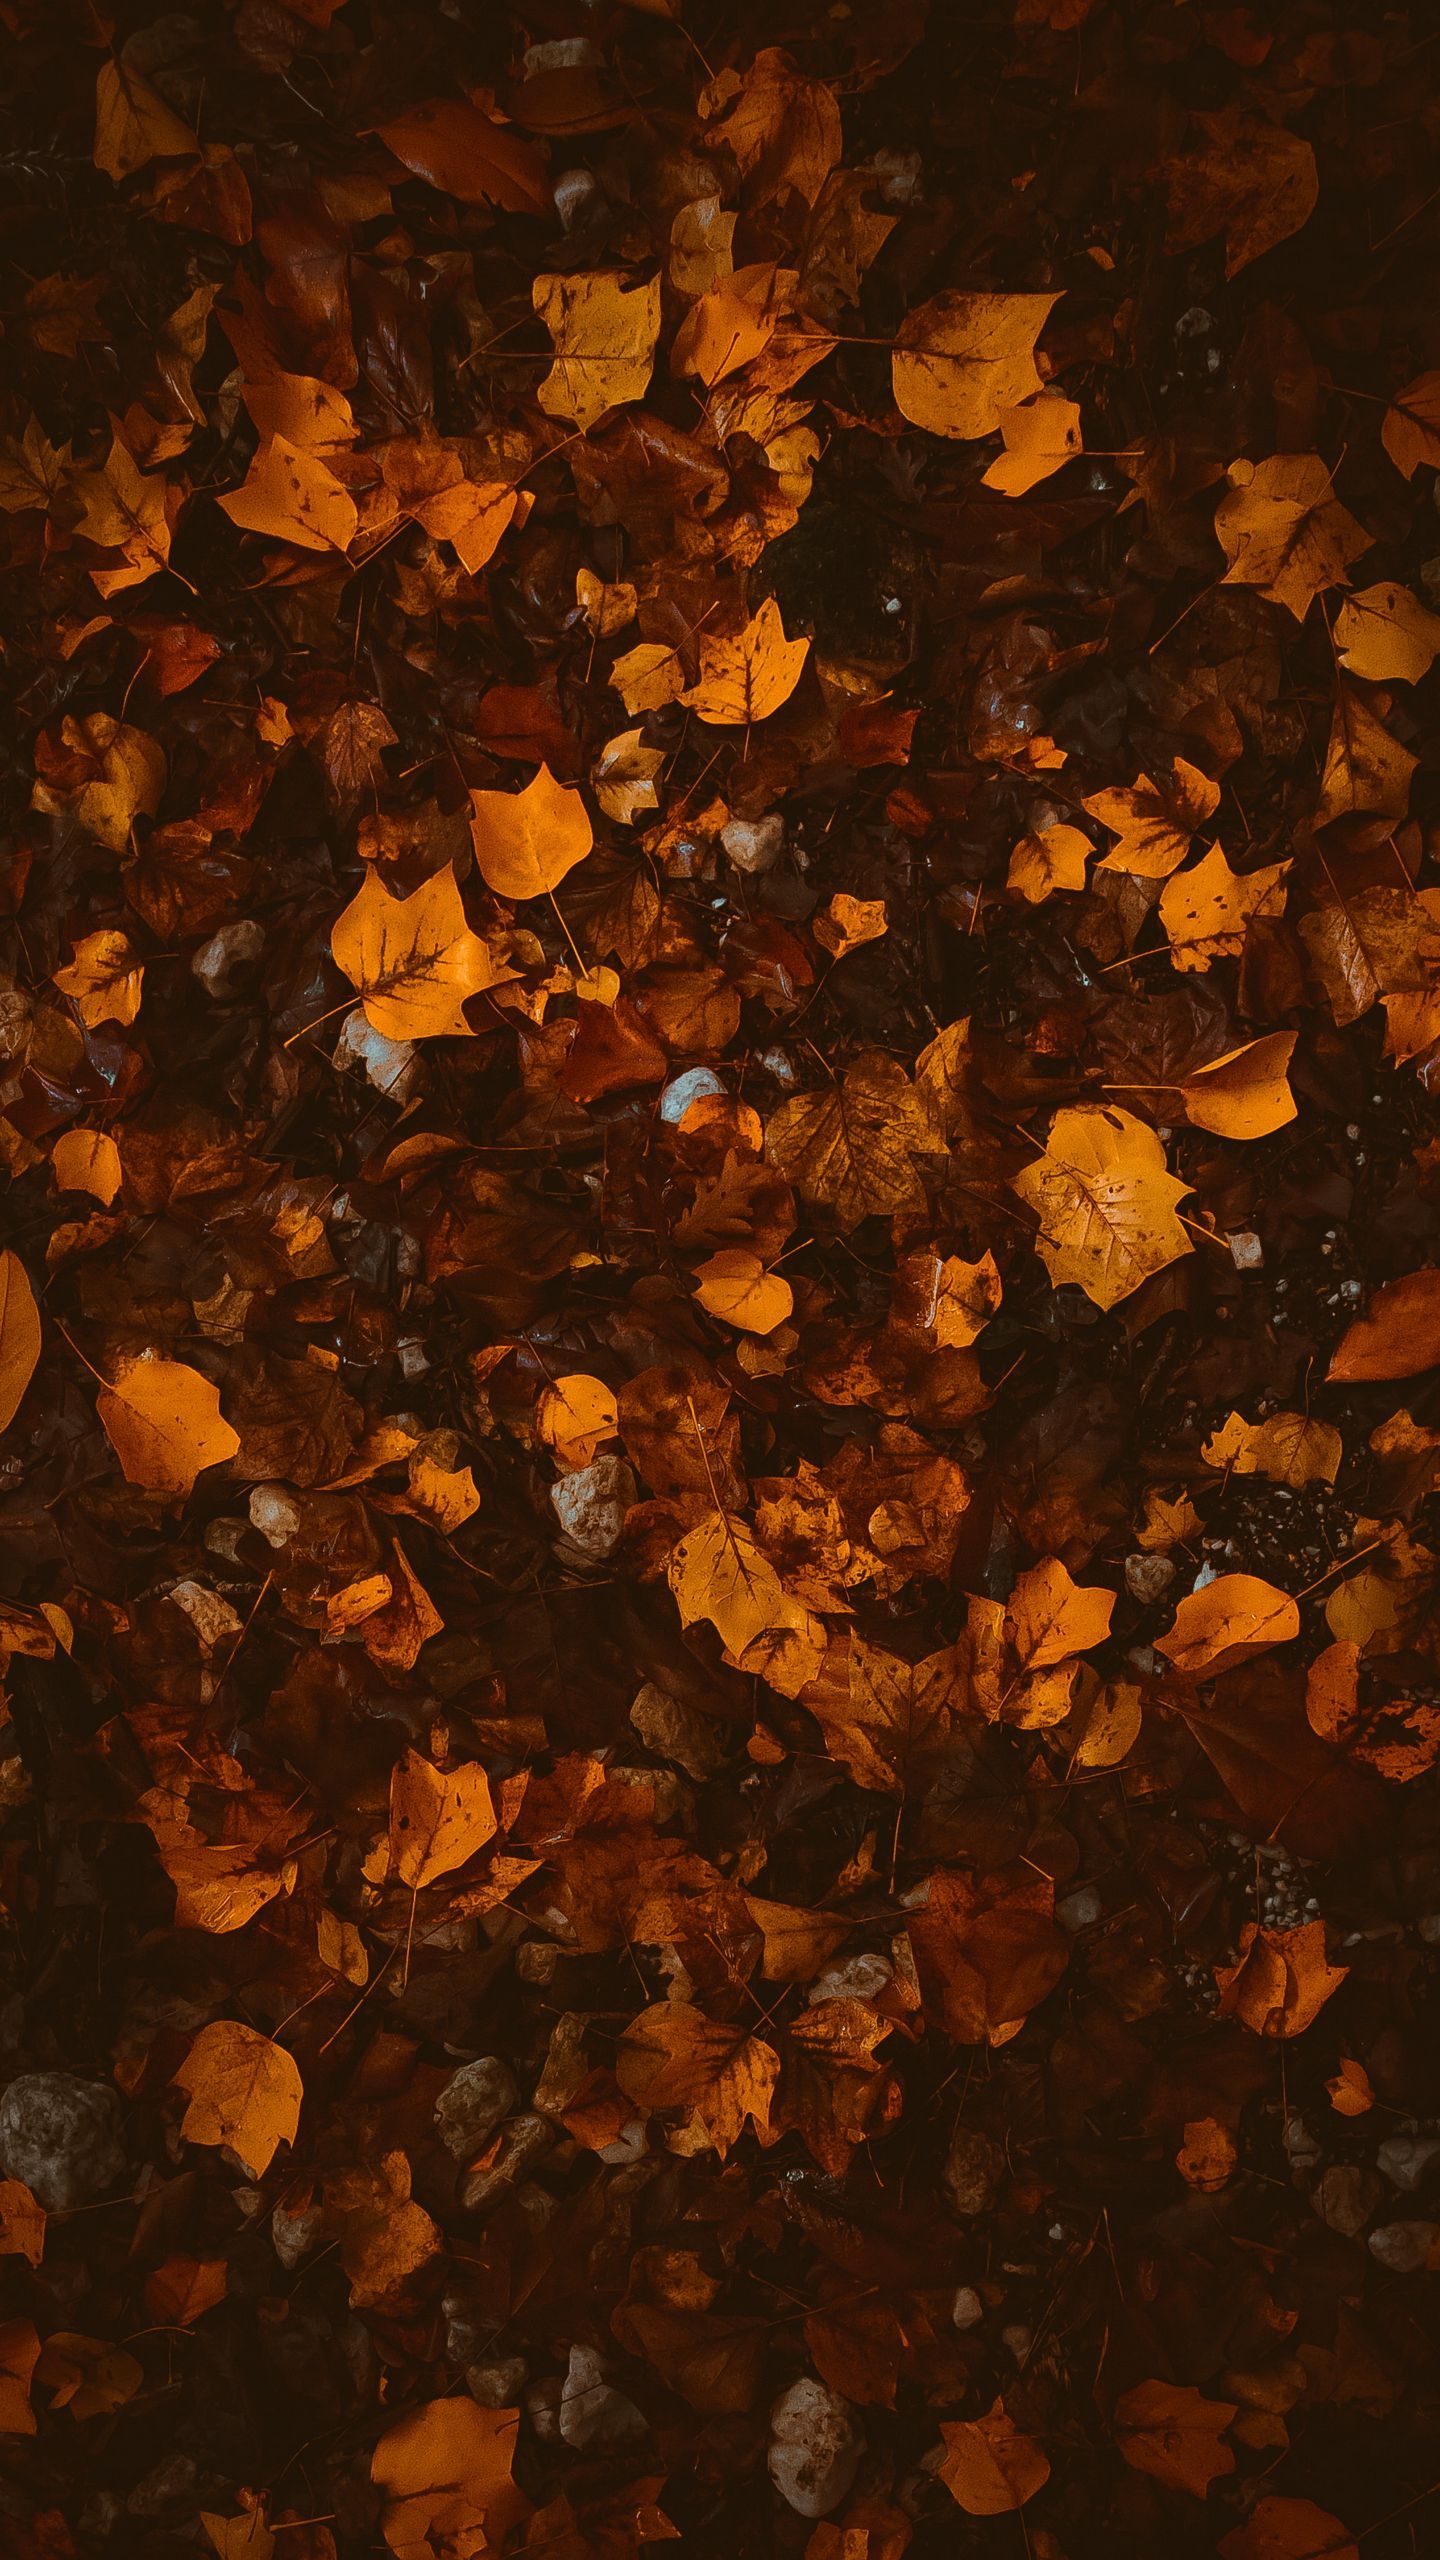 Download wallpaper 1440x2560 foliage, leaves, autumn, fallen, brown, yellow qhd samsung galaxy s s edge, note, lg g4 HD background